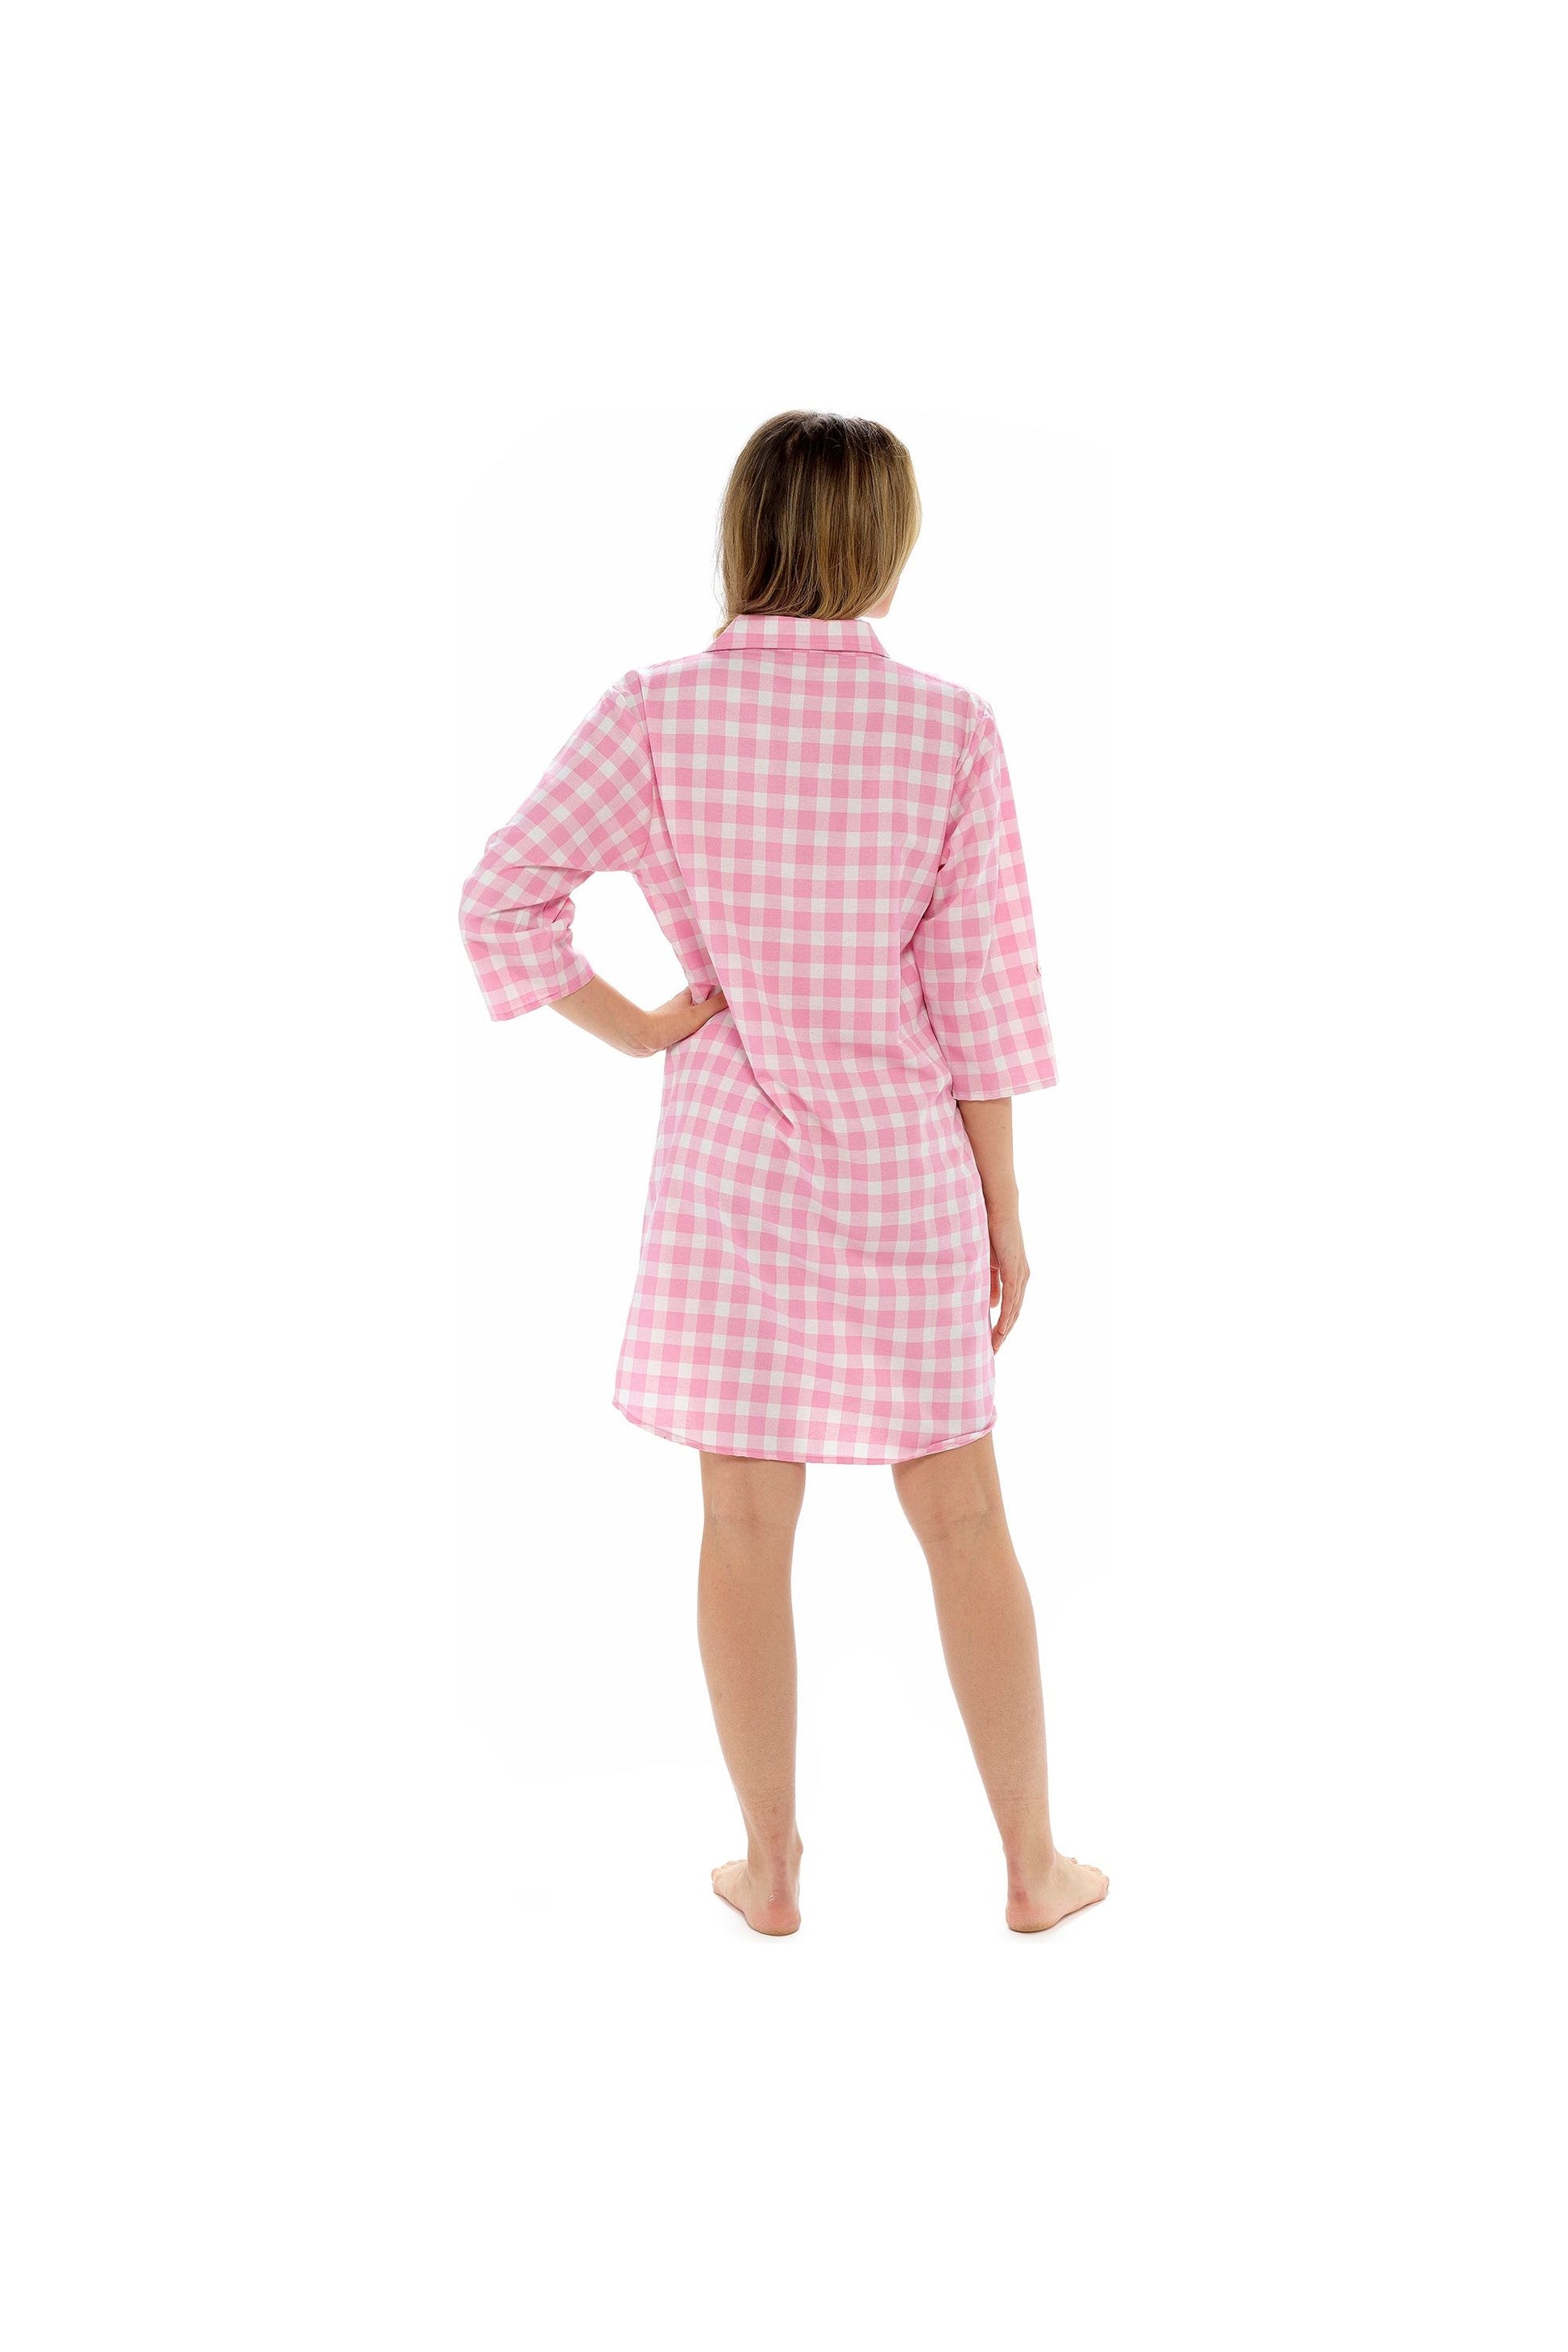 Women's Pink Check Shirt Style Nightdress - Pyjamas.com